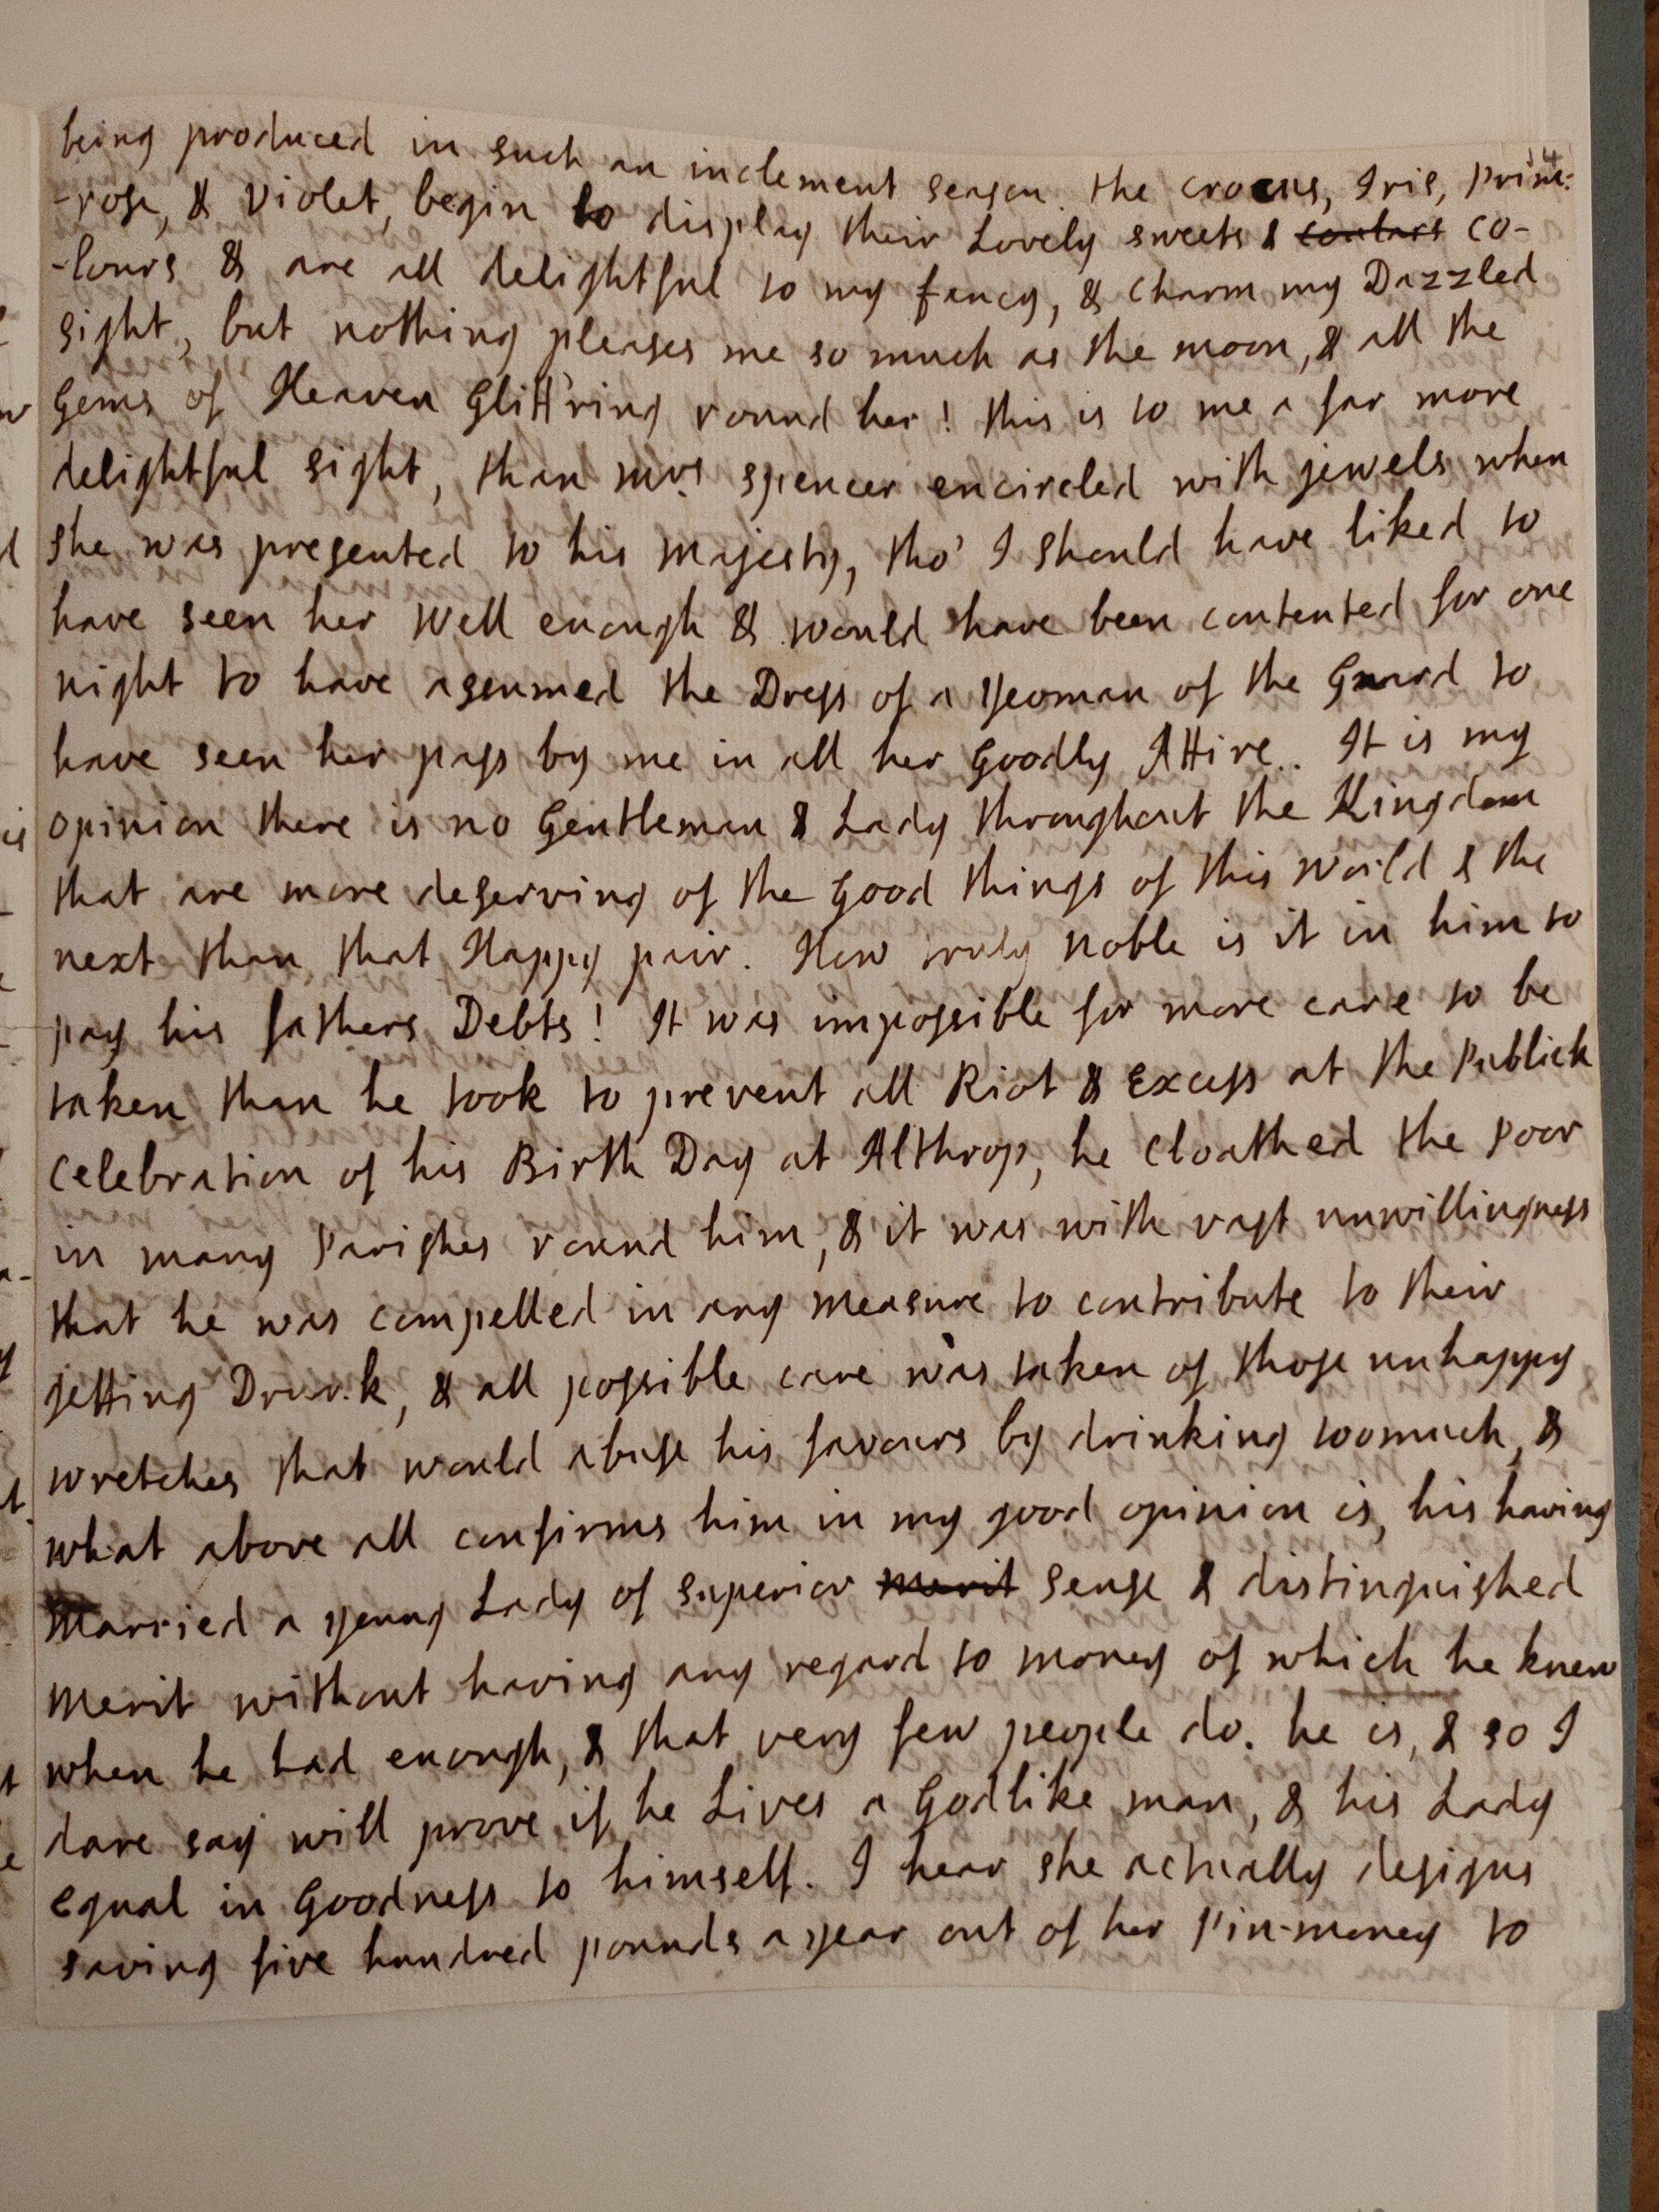 Image #3 of letter: Jane Johnson to Mrs Brompton, 28 February 1756